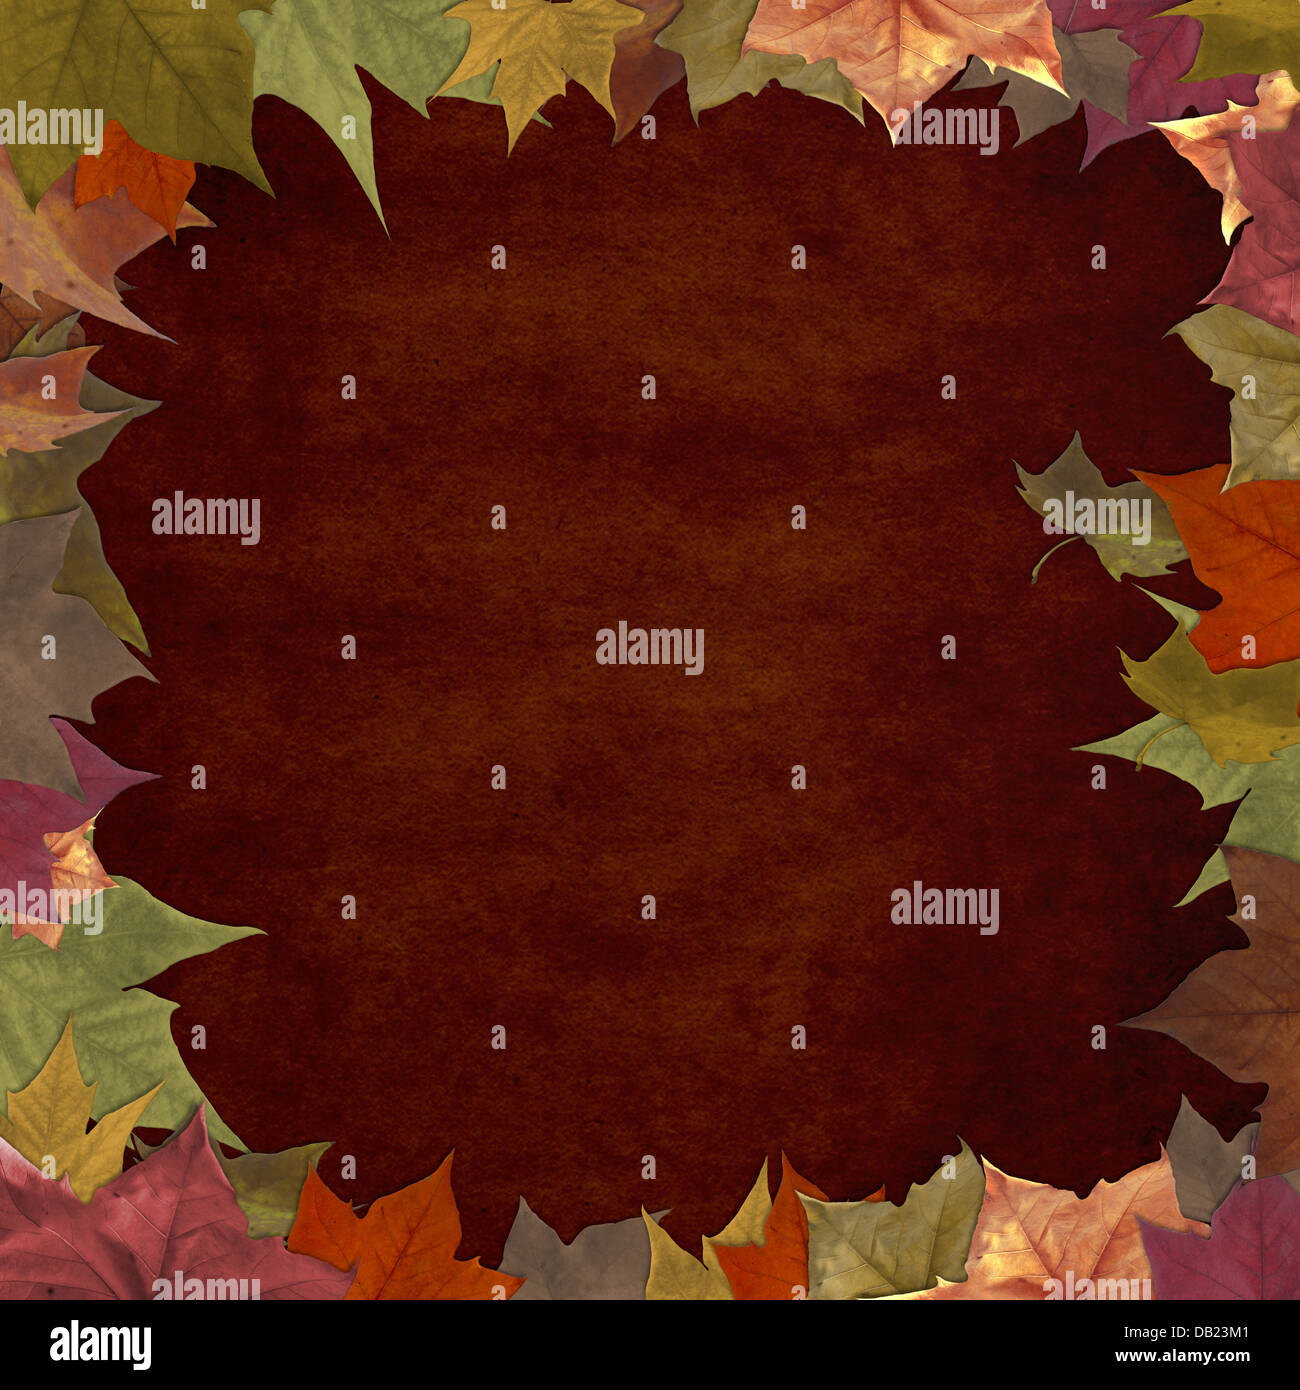 Autumn leaves grunge frame background Stock Photo